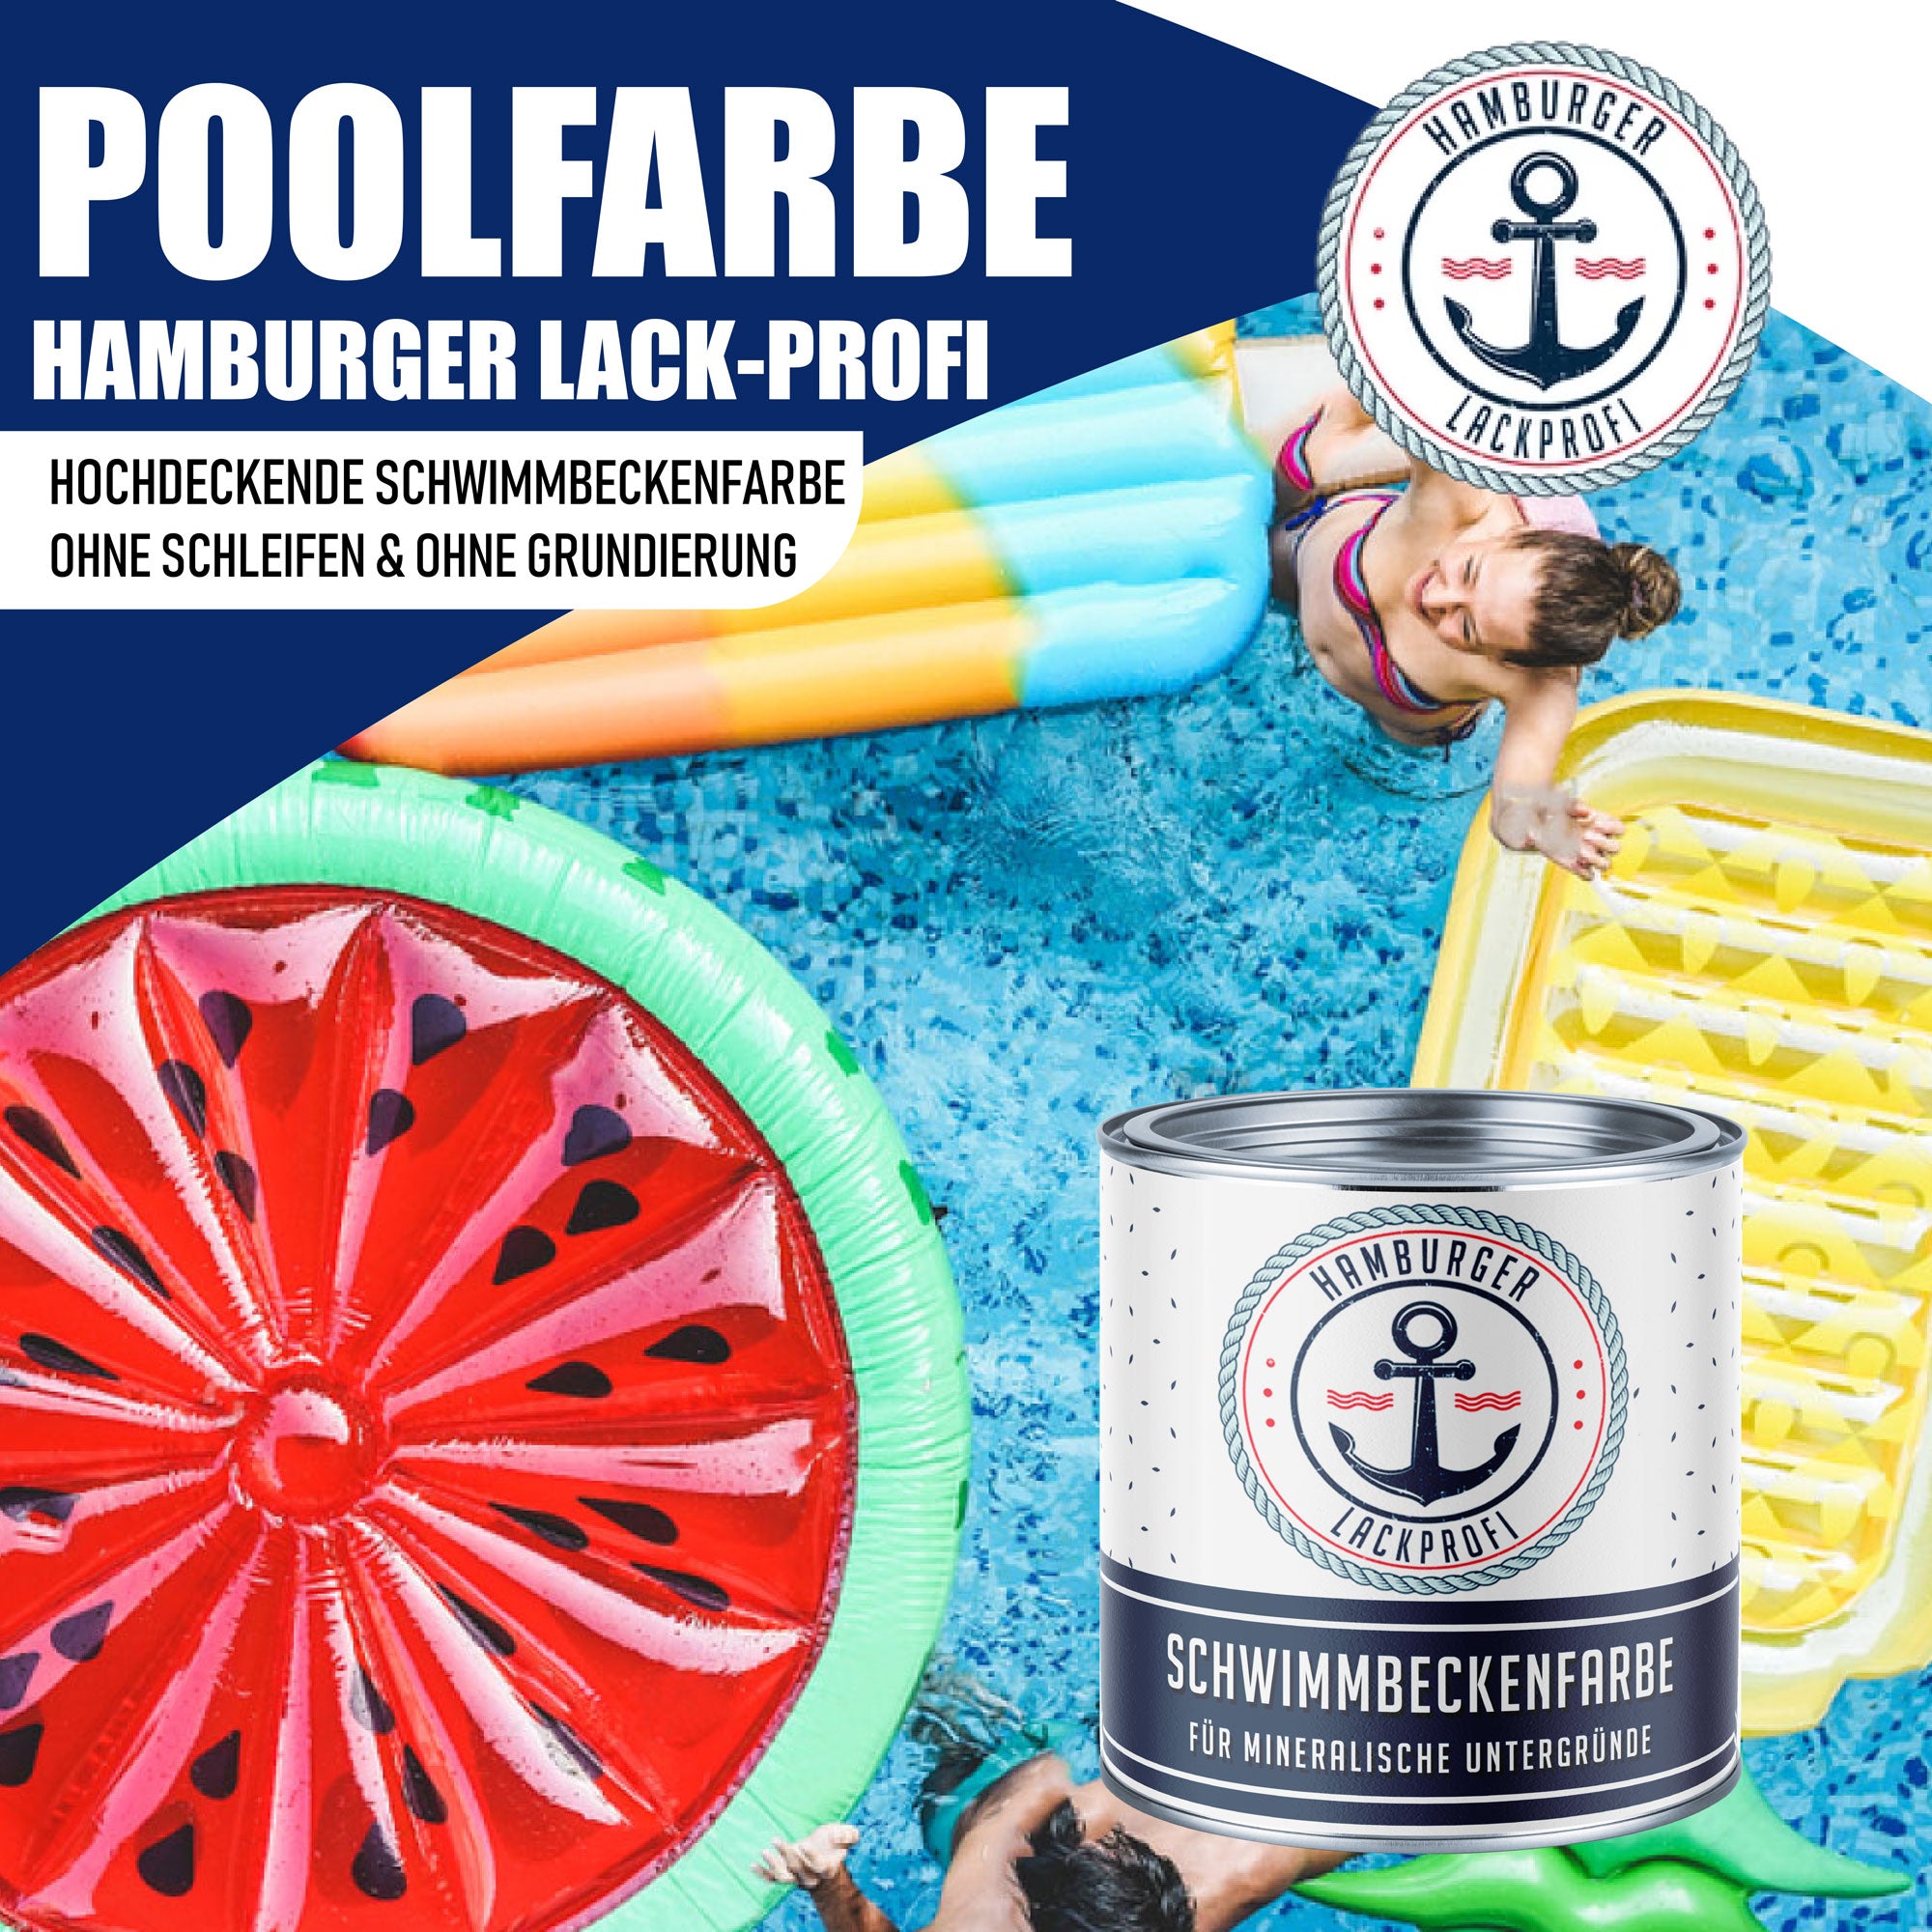 Hamburger Lack-Profi Schwimmbeckenfarbe Taubenblau RAL 5014 - hochdeckende Poolfarbe